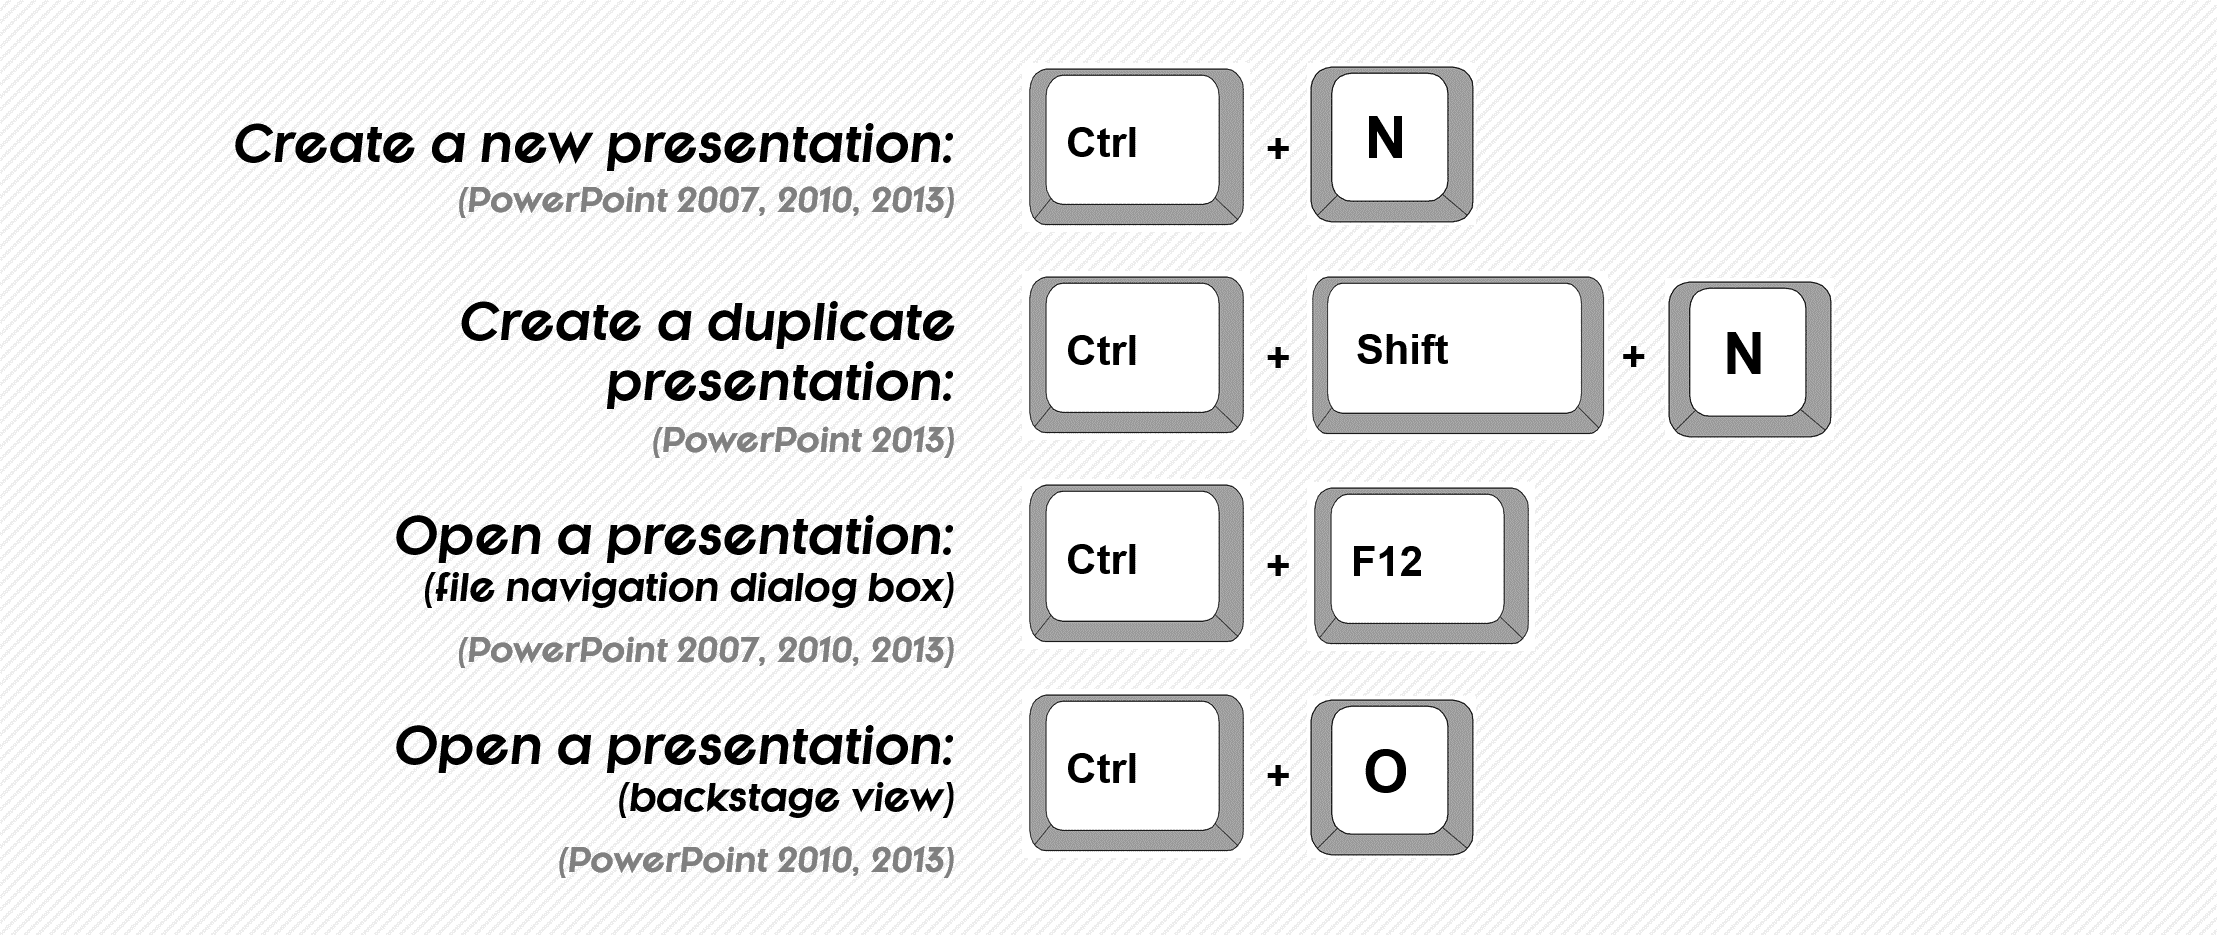 close a presentation shortcut key